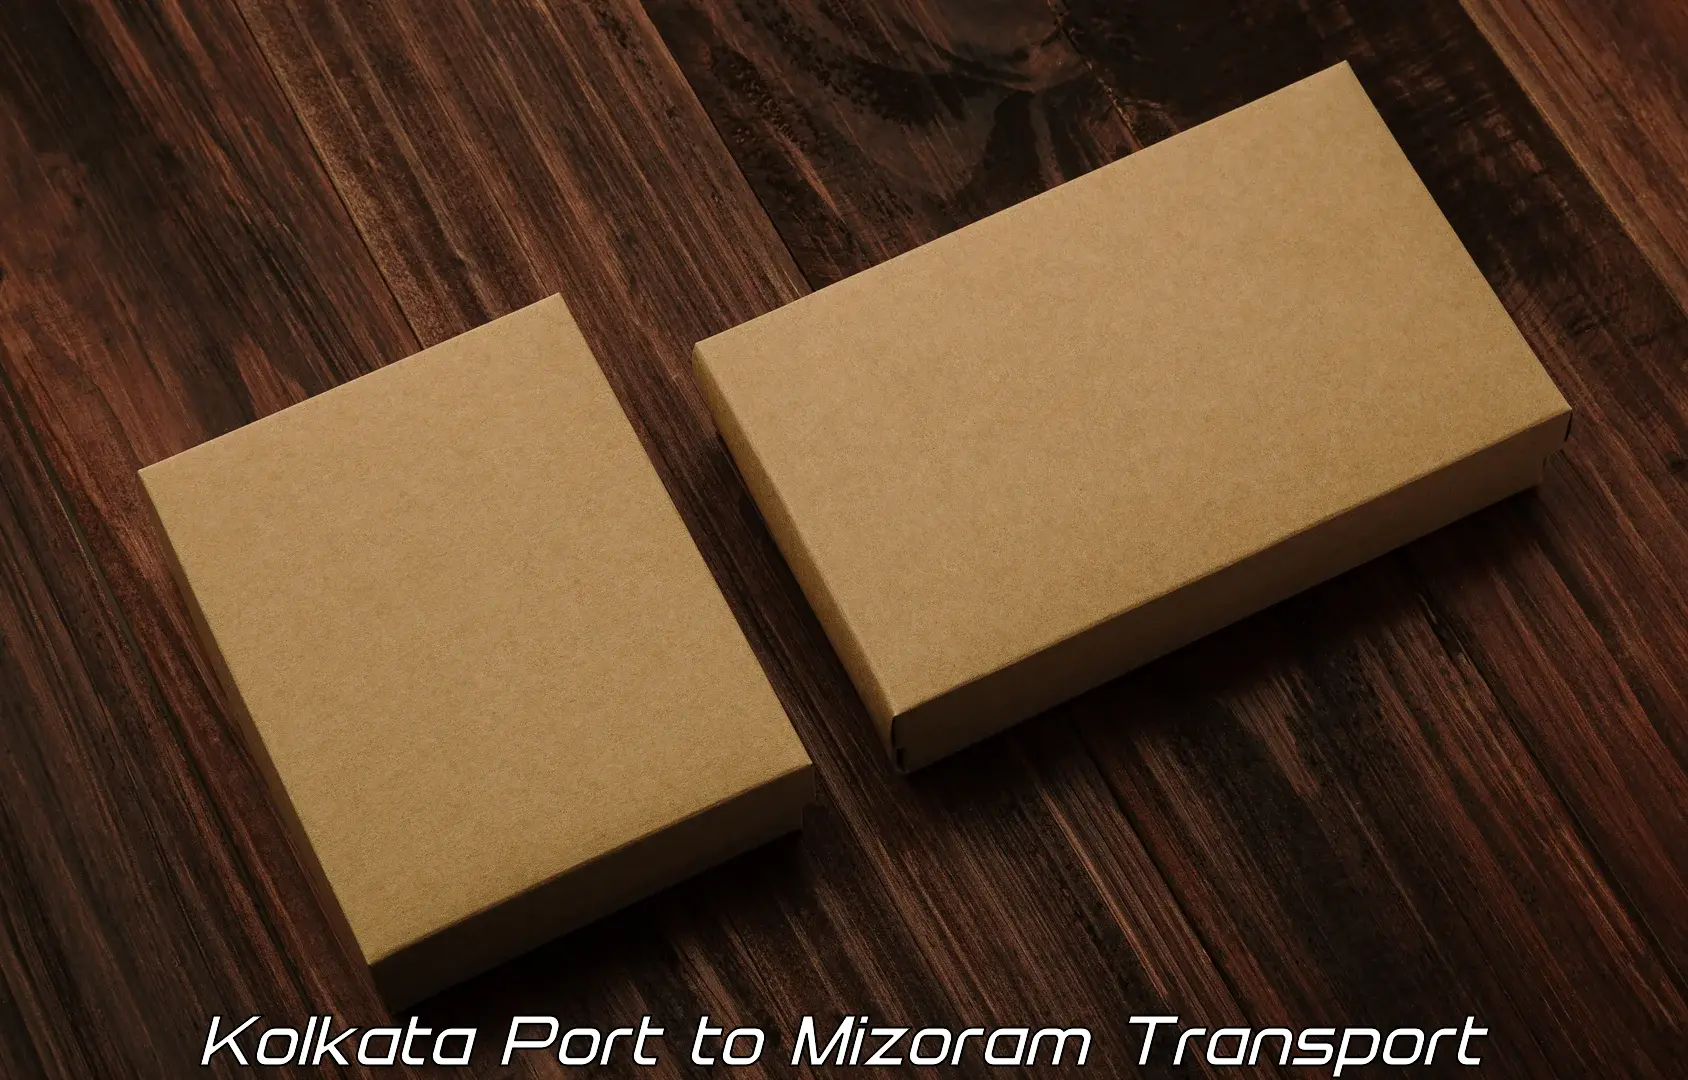 Road transport online services Kolkata Port to Mizoram